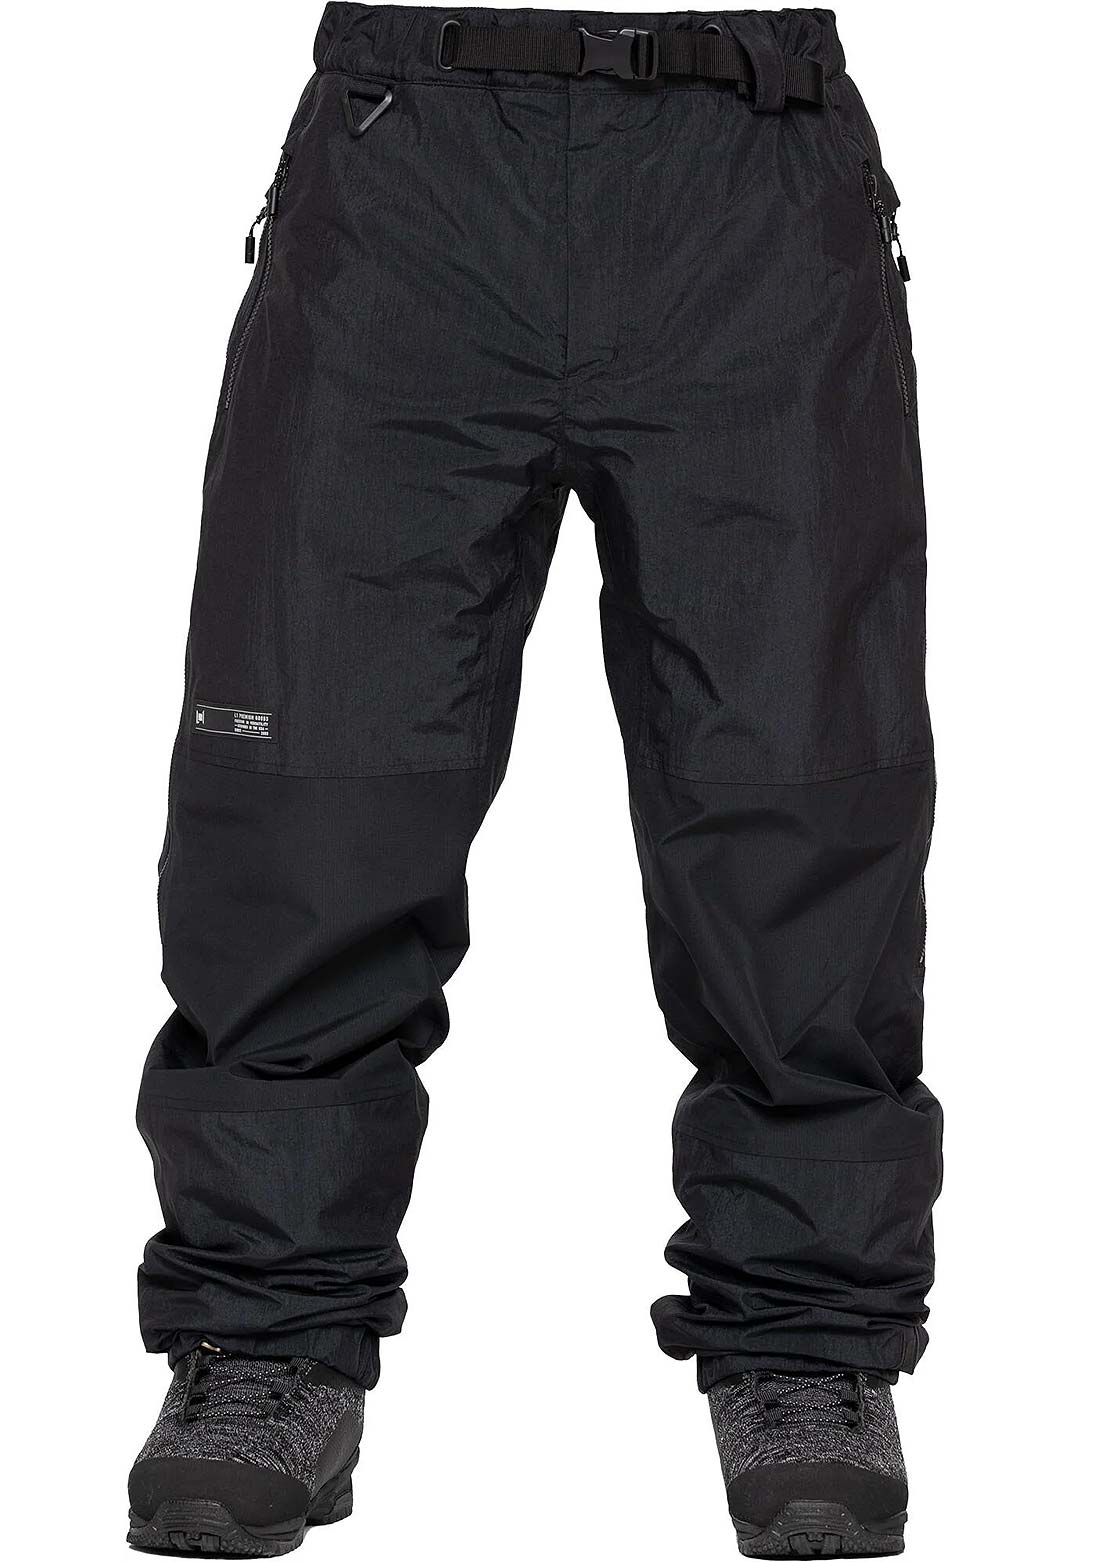 L1 Unisex Ventura Pants Black